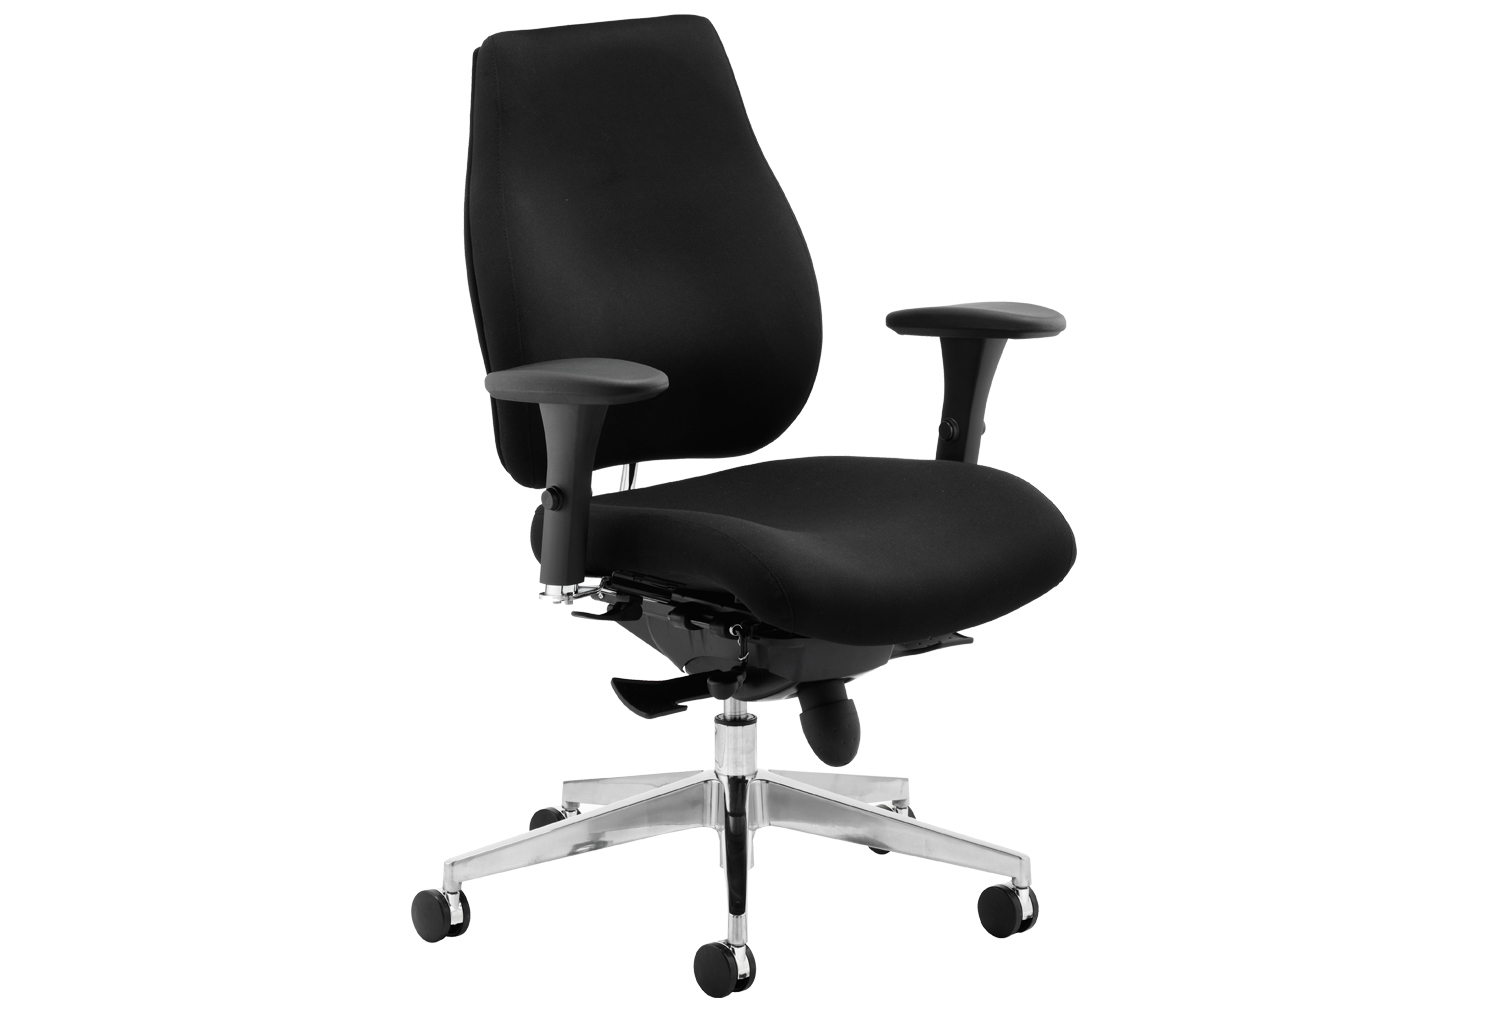 Praktikos Plus Posture Operator Office Chair, Black, Express Delivery